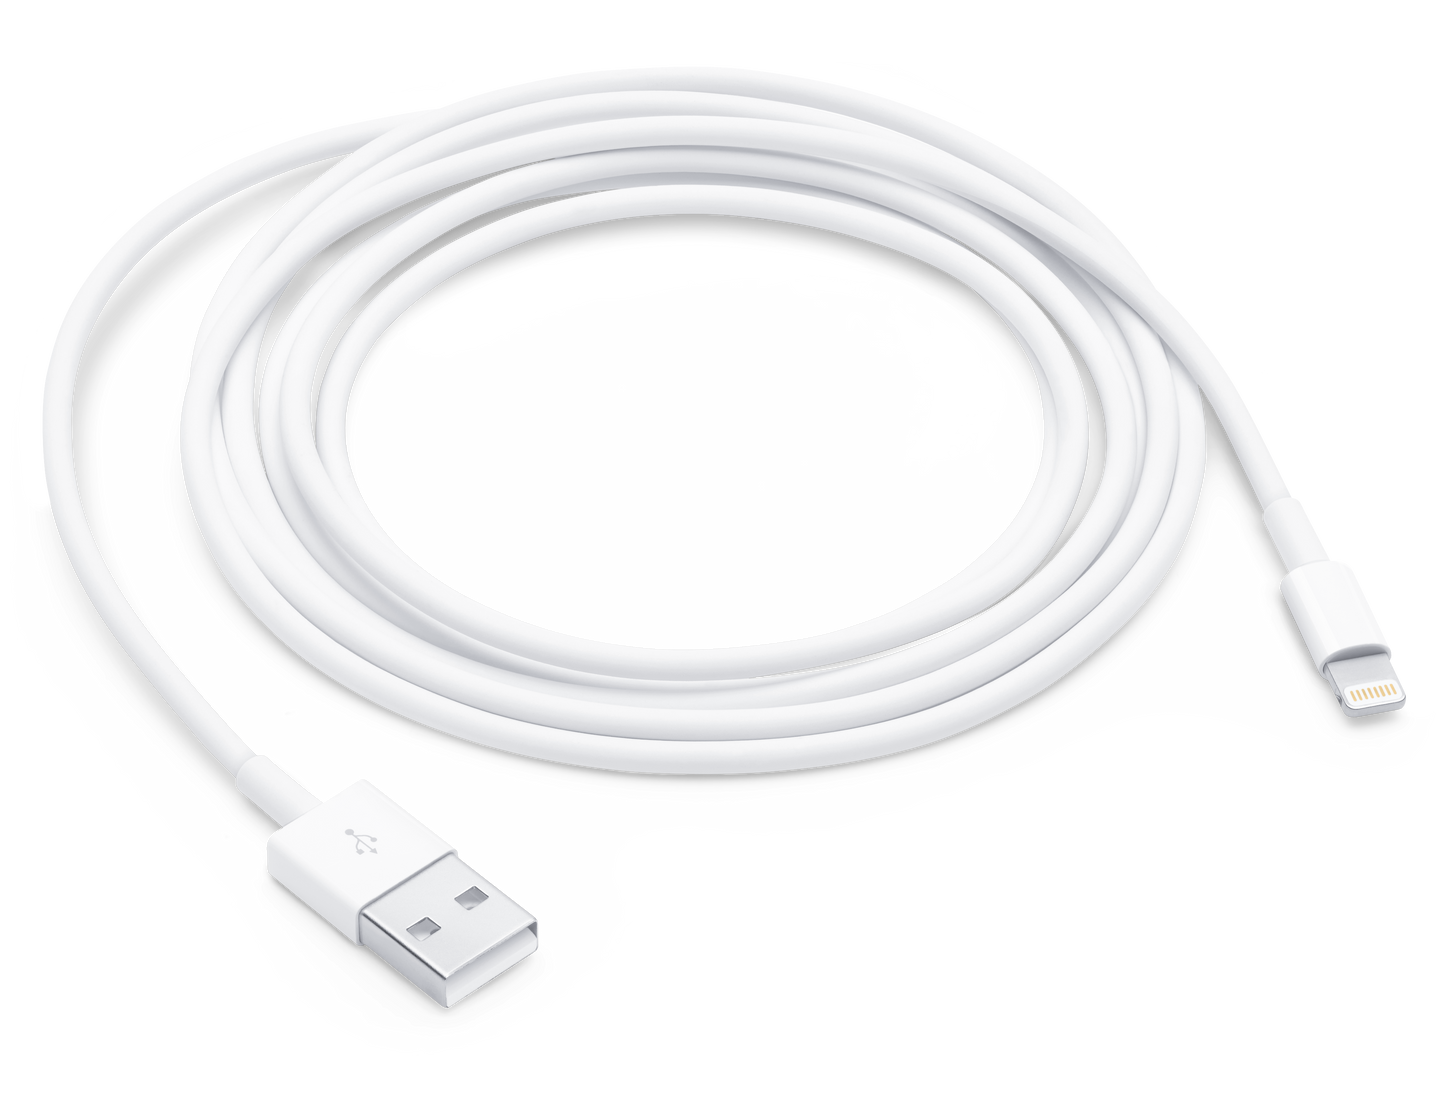 Cable Apple de conector Lightning a USB de 2M - Blanco